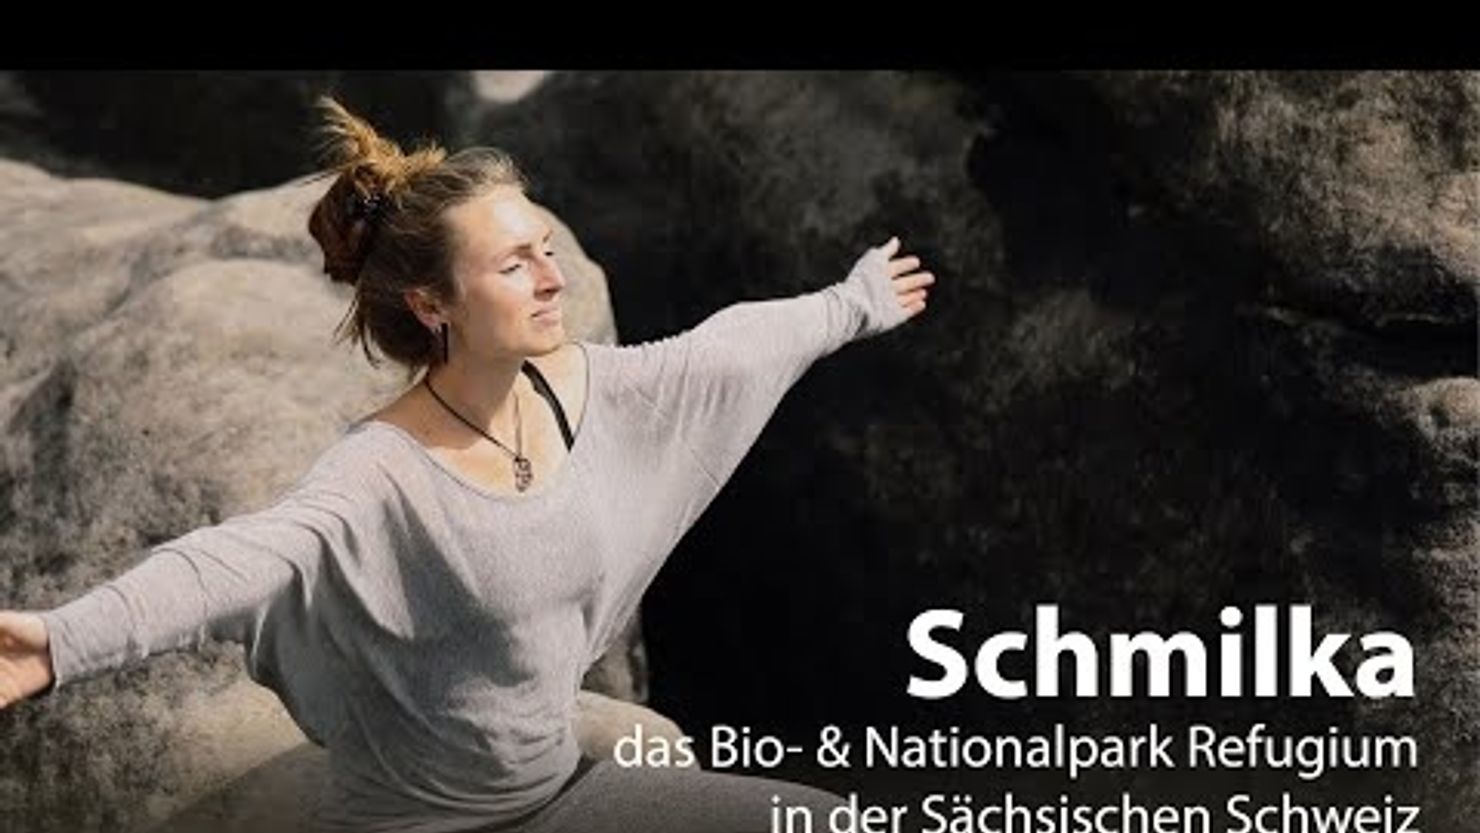 Video: Bio- & Nationalpark Refugium Schmilka #1